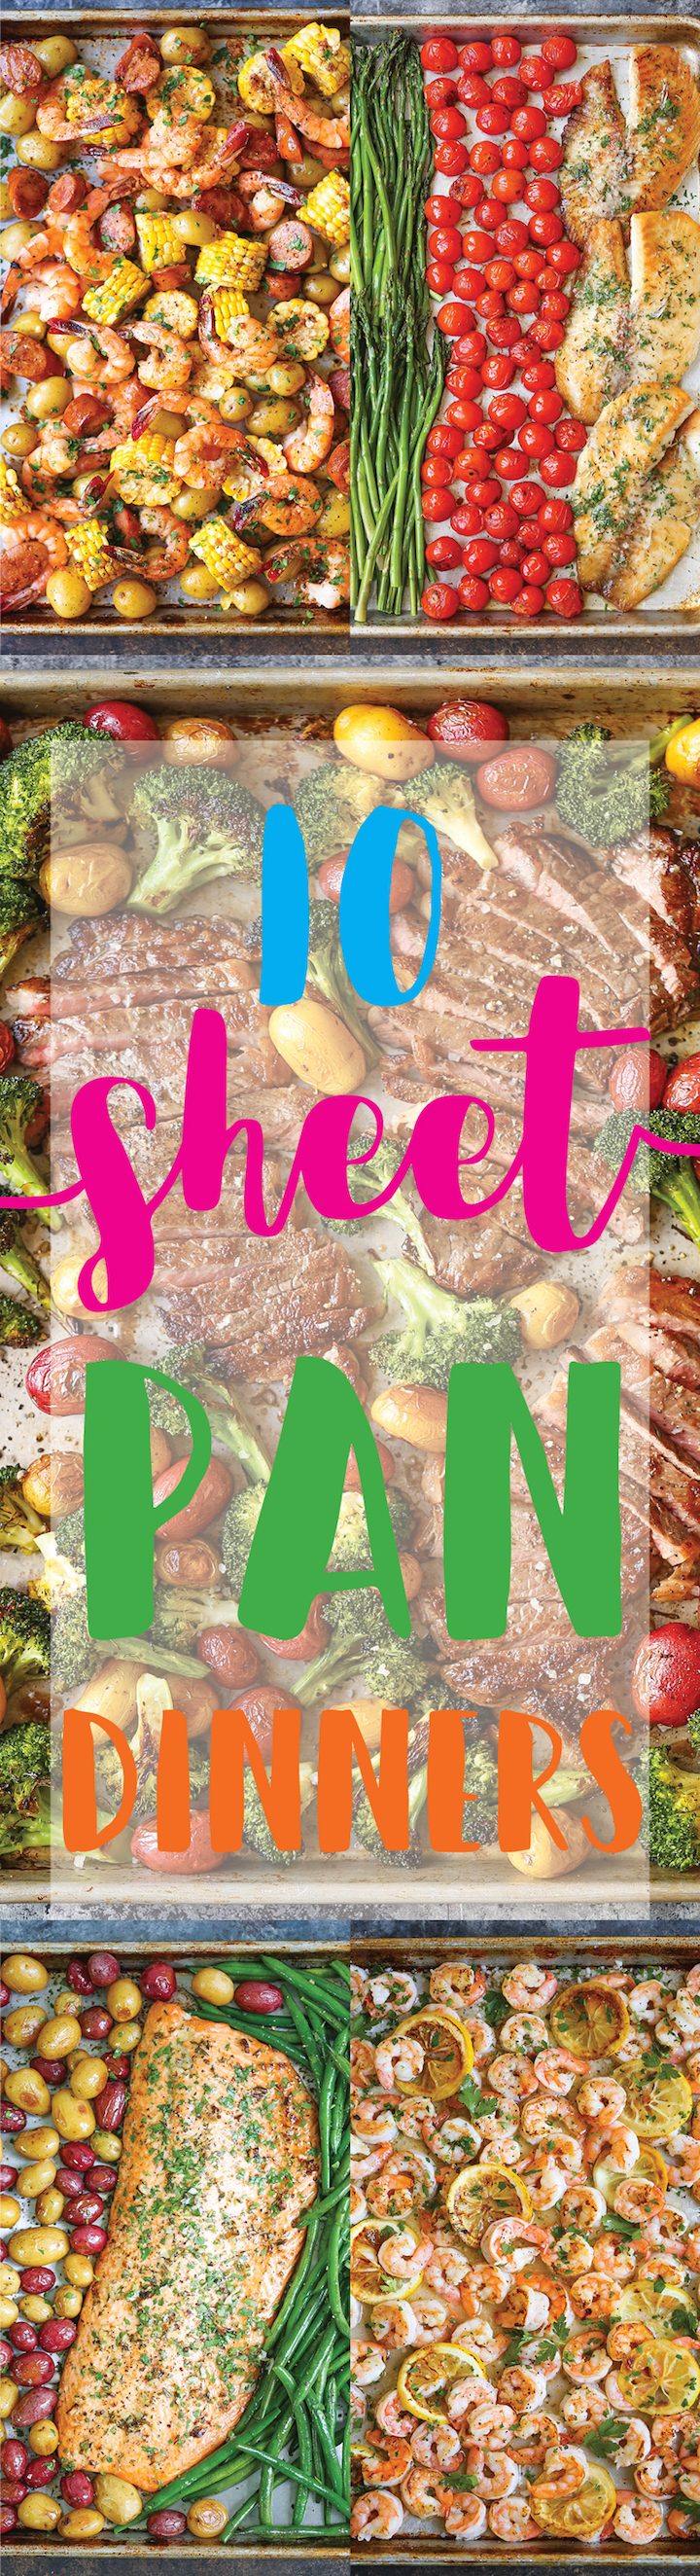 Sheet Pan Steak and Veggies - Damn Delicious